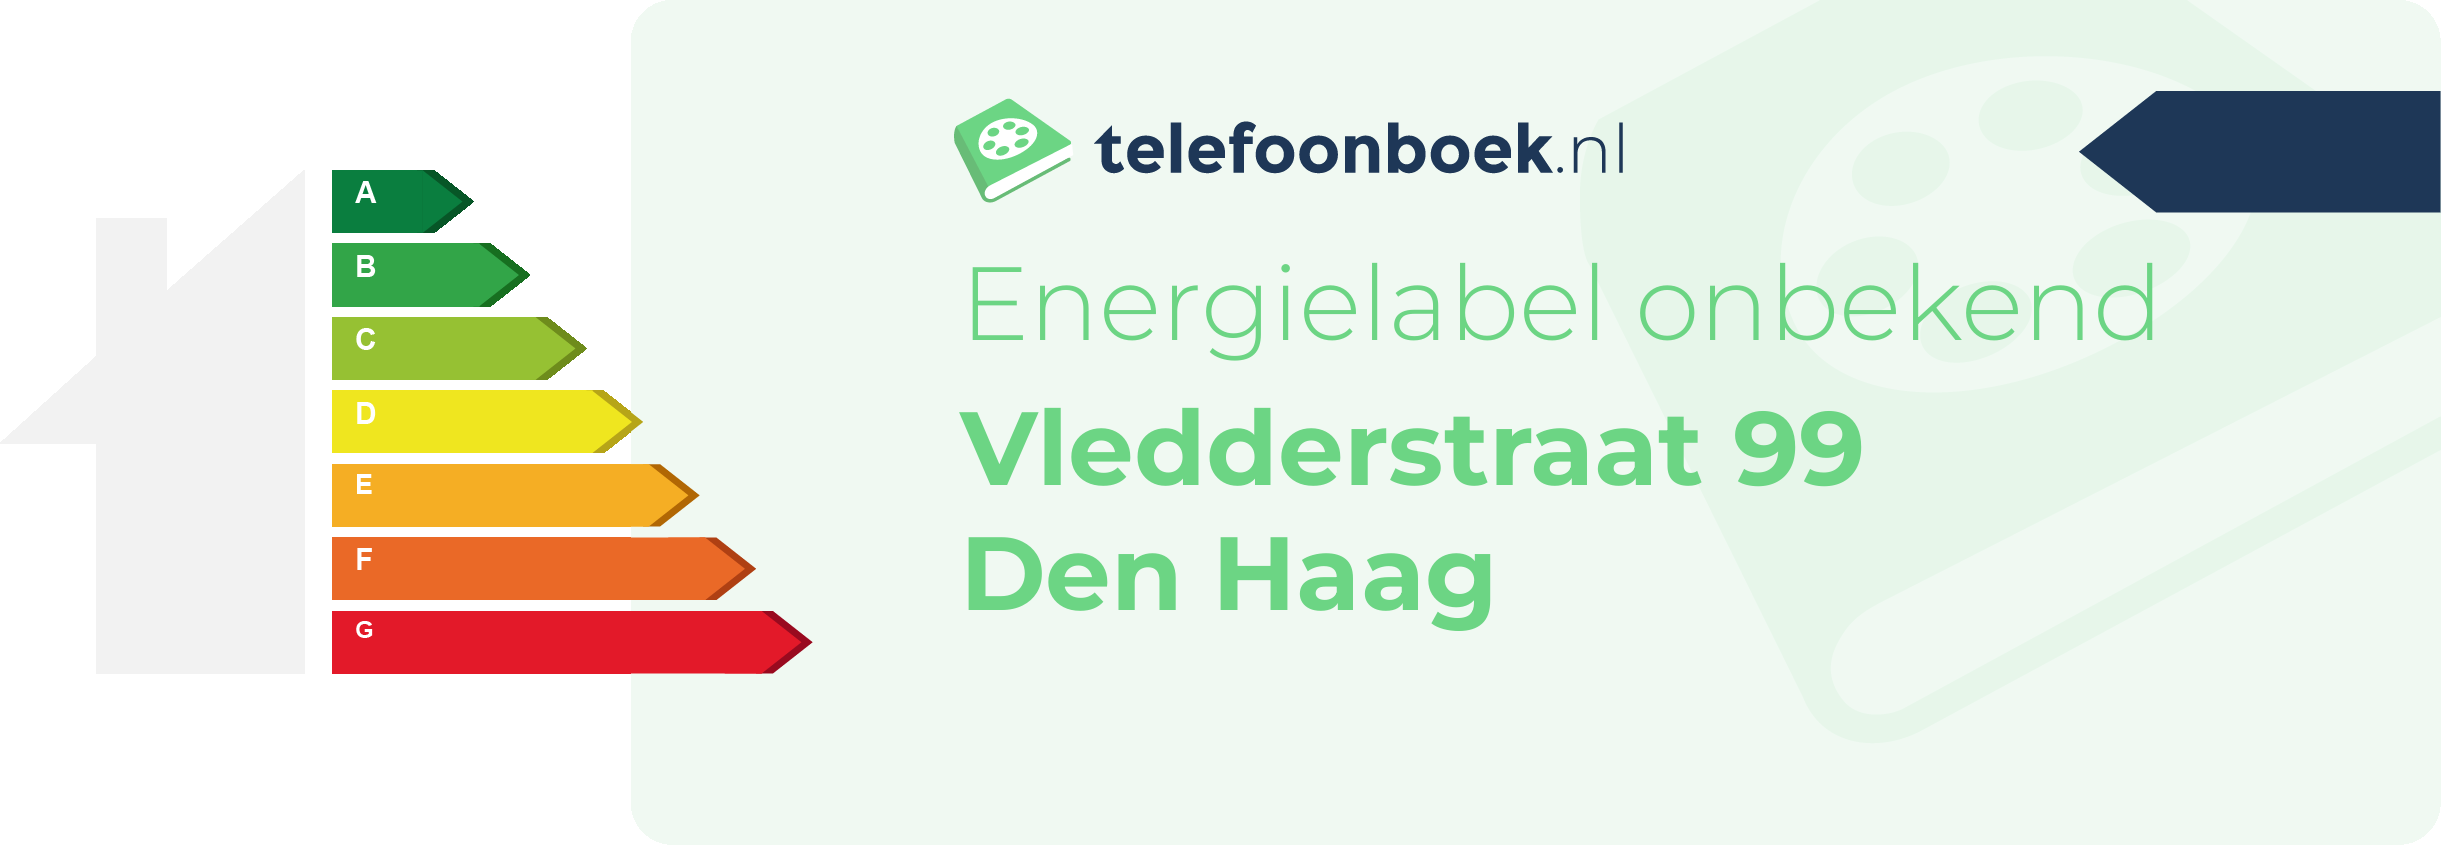 Energielabel Vledderstraat 99 Den Haag